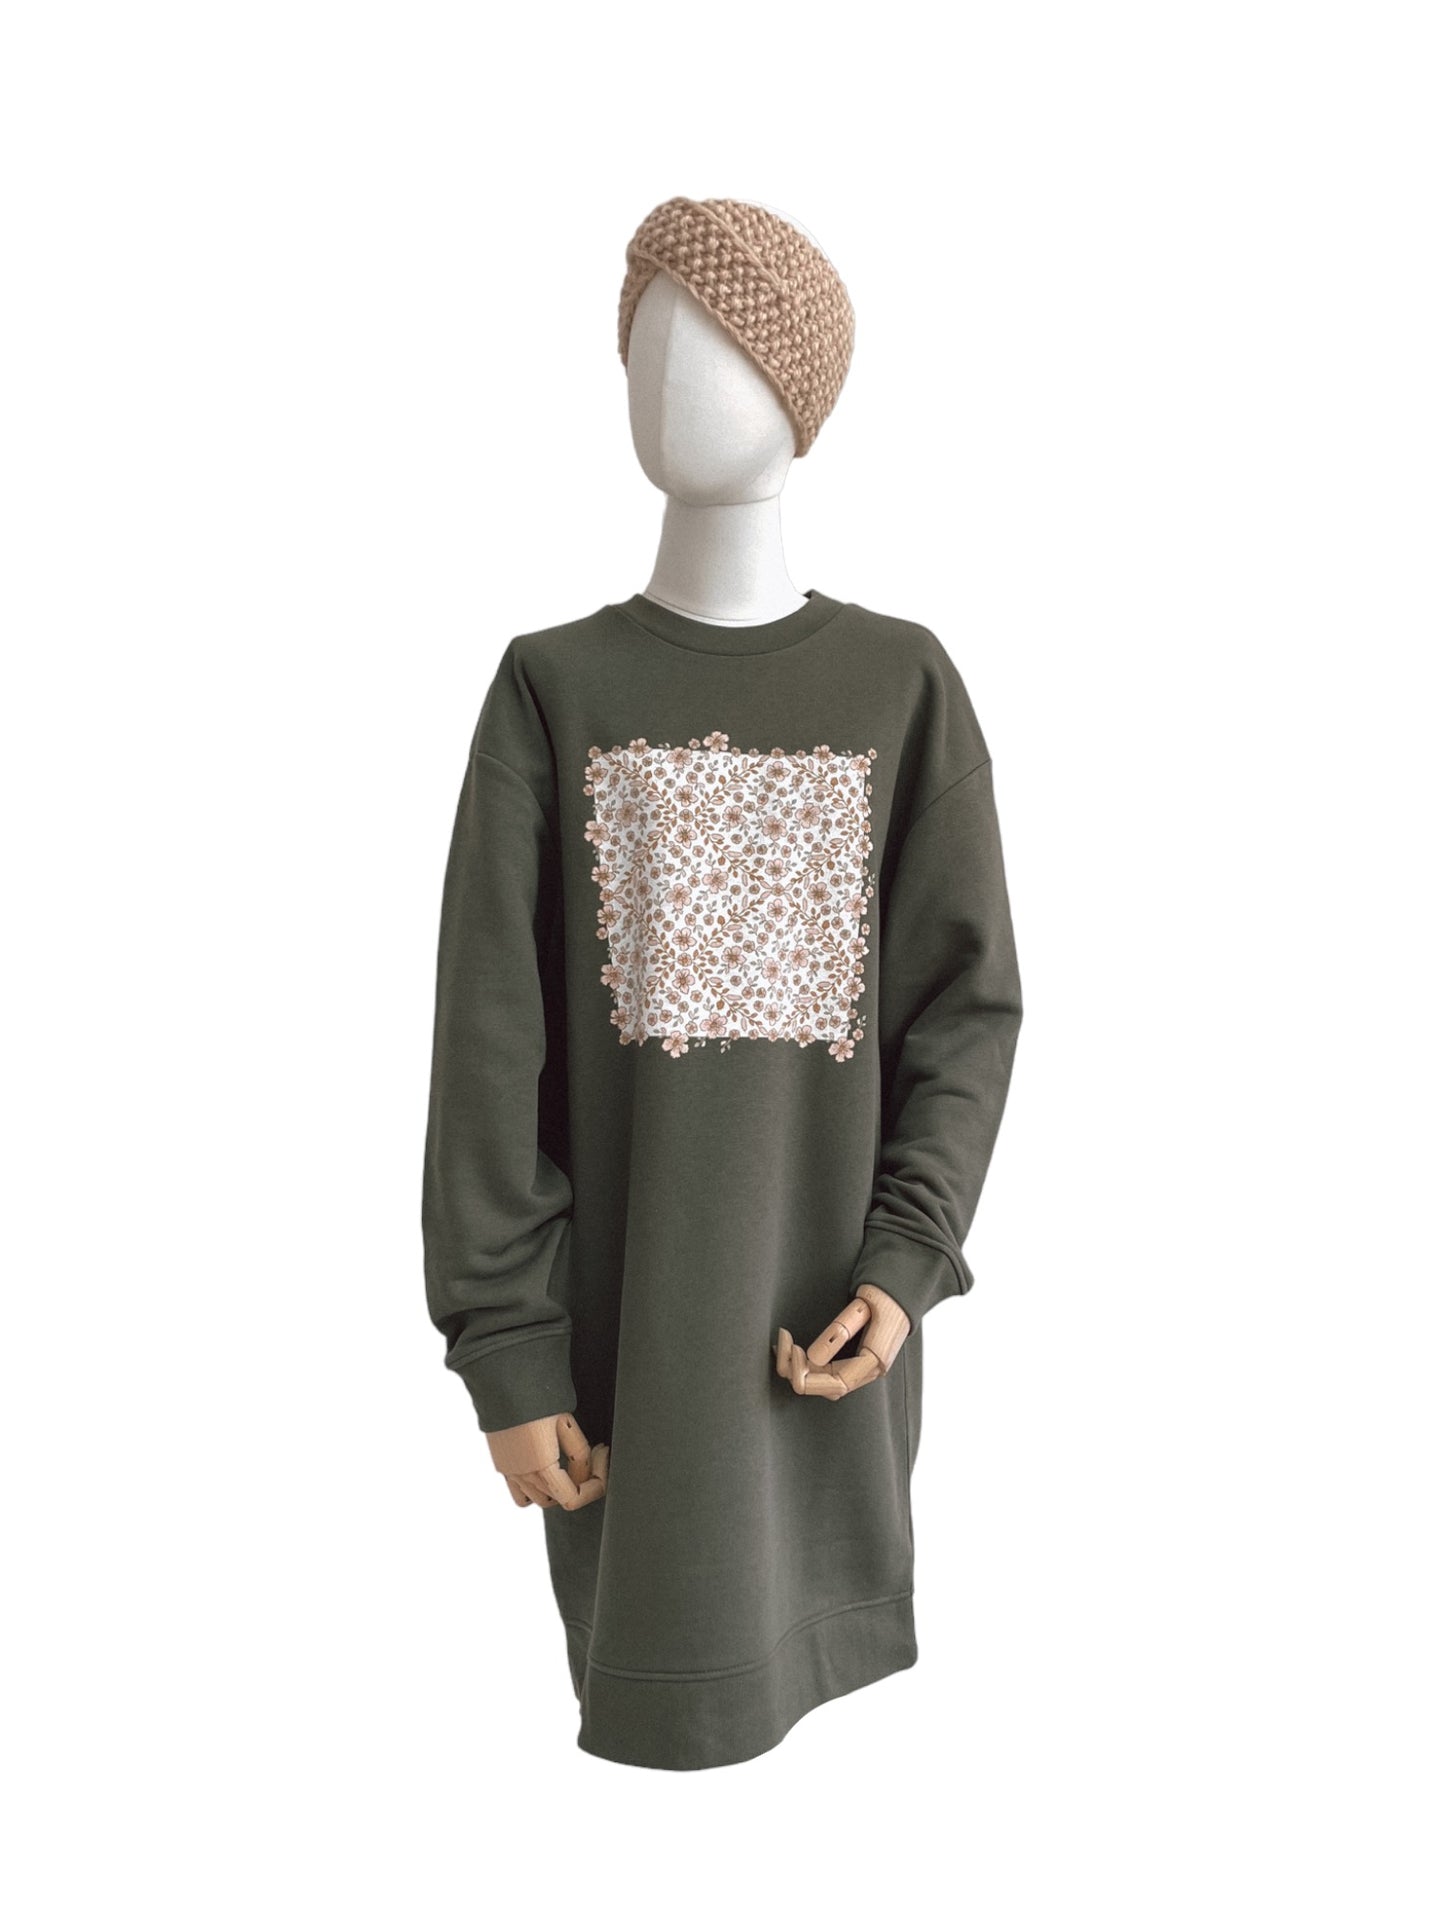 Oversized sweatshirt dress / Floral Garland / rosemary